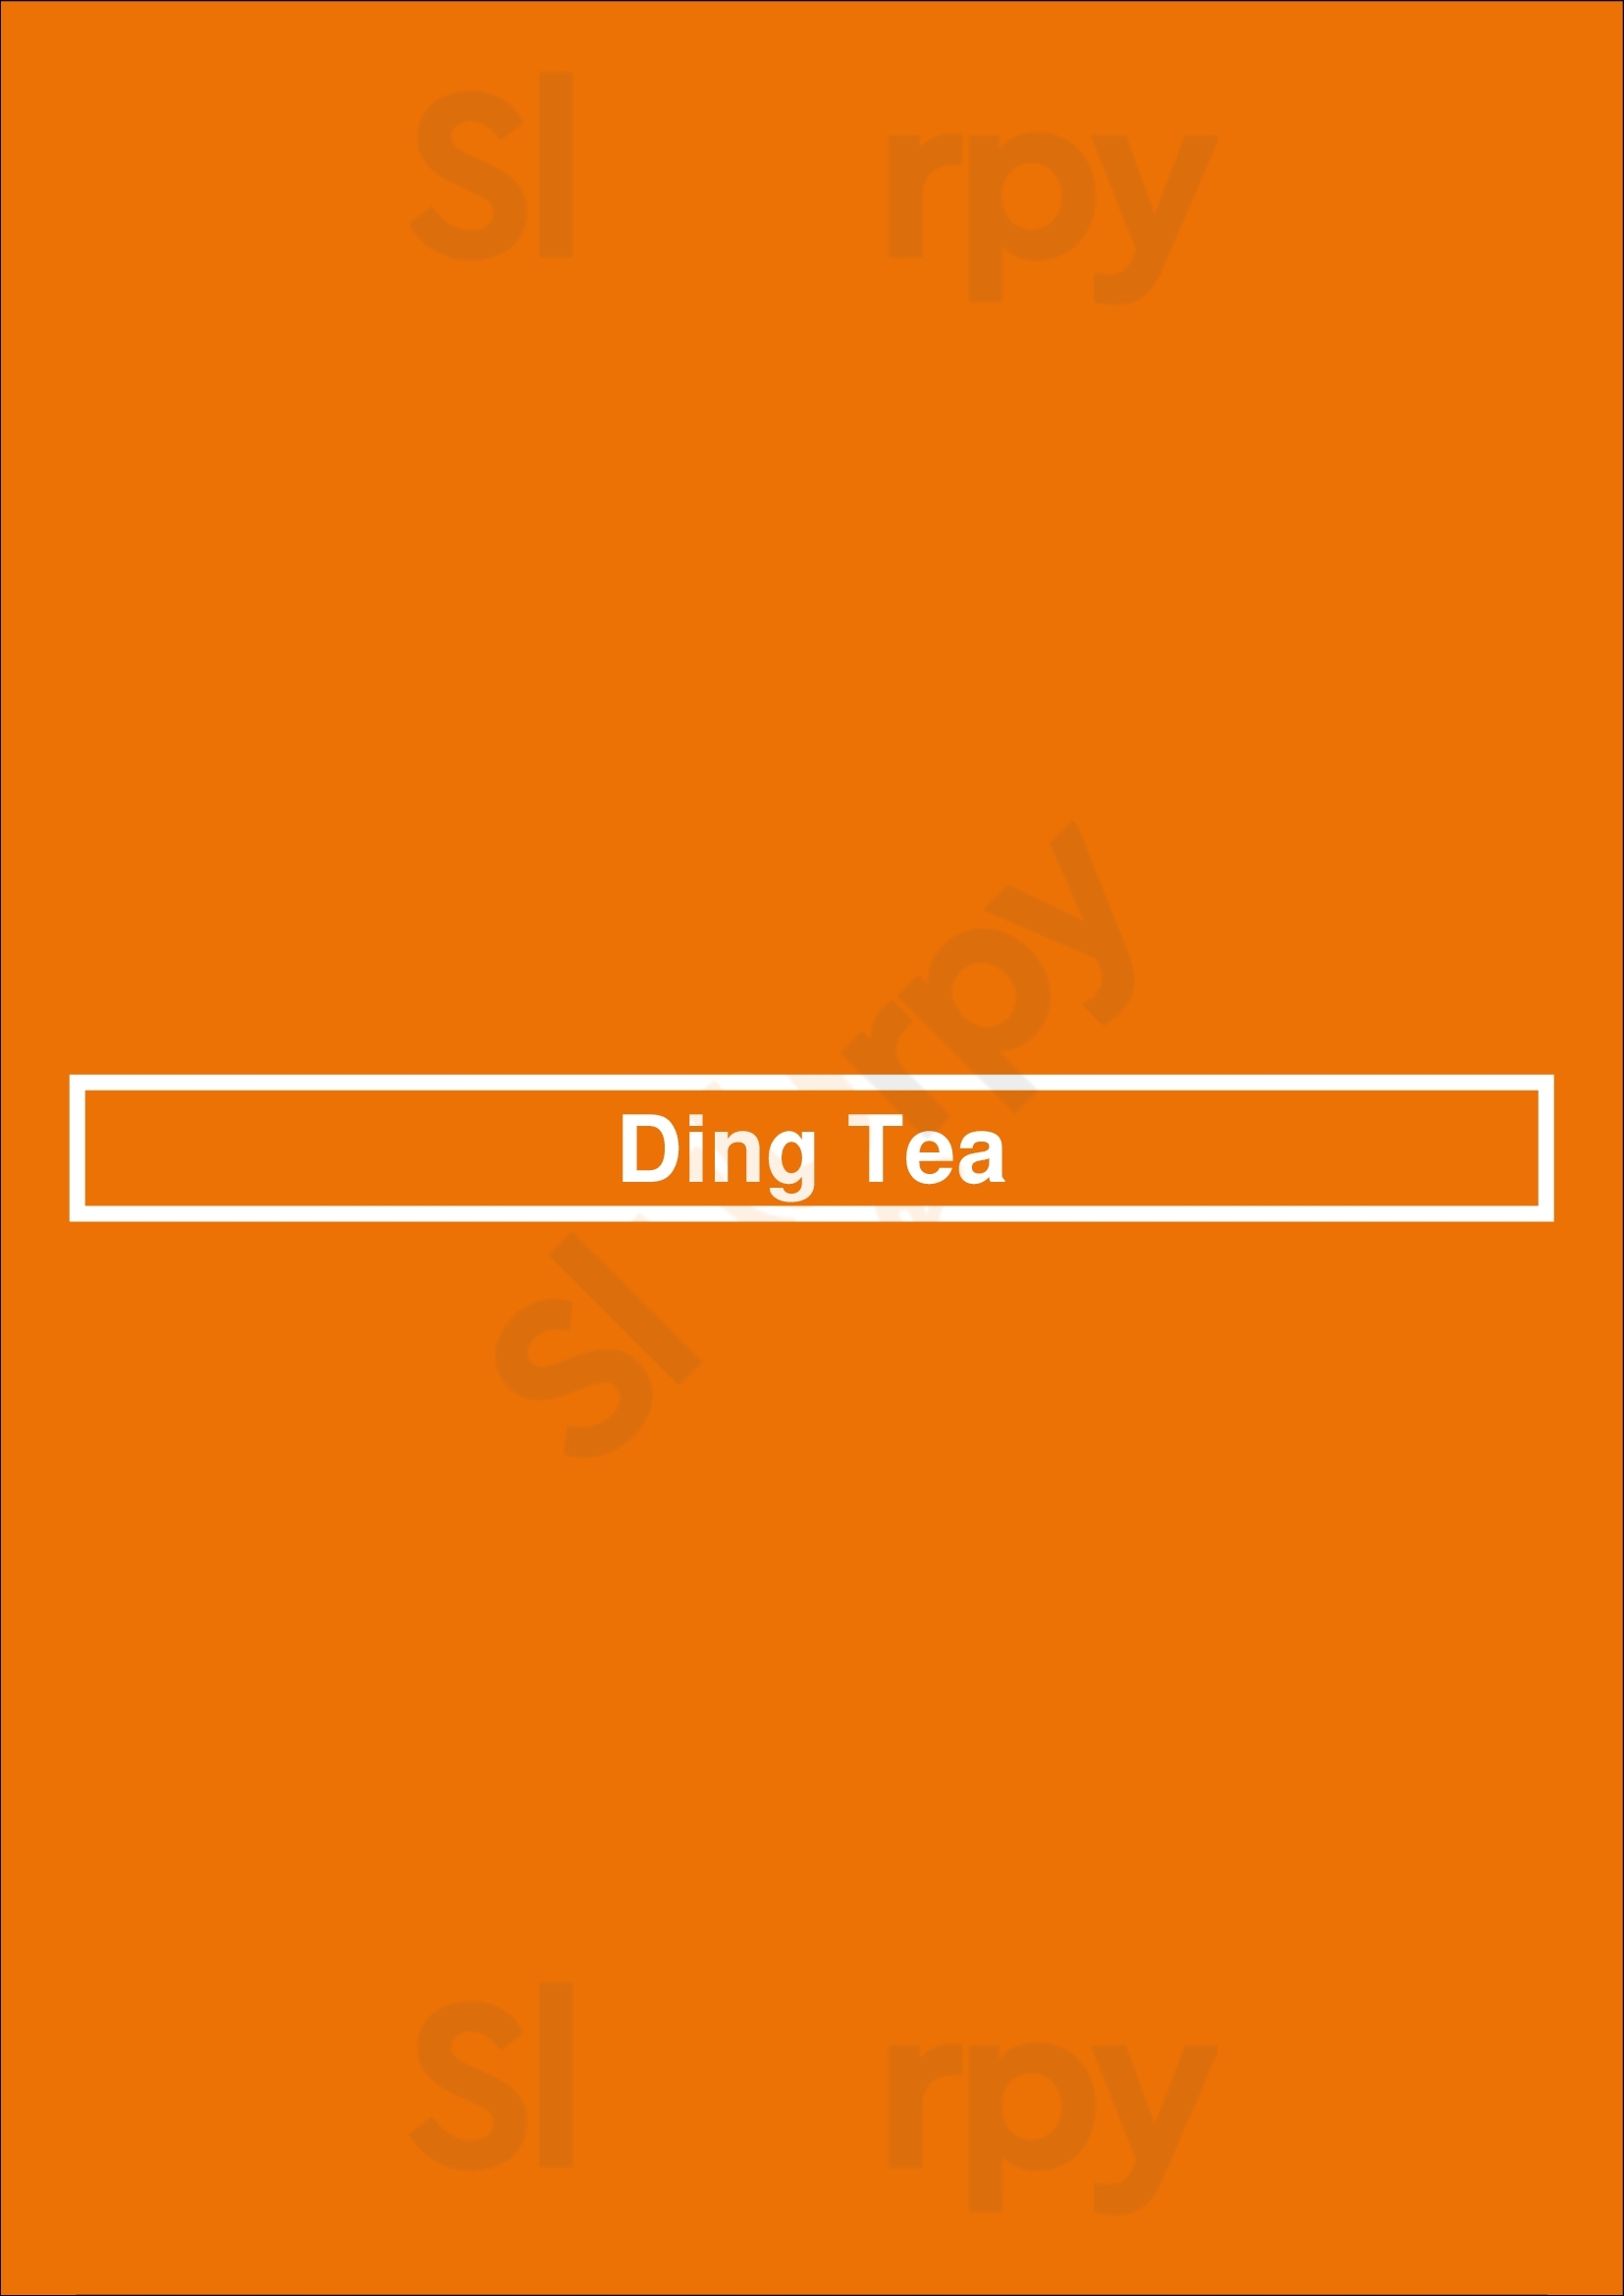 Ding Tea Mississauga Menu - 1